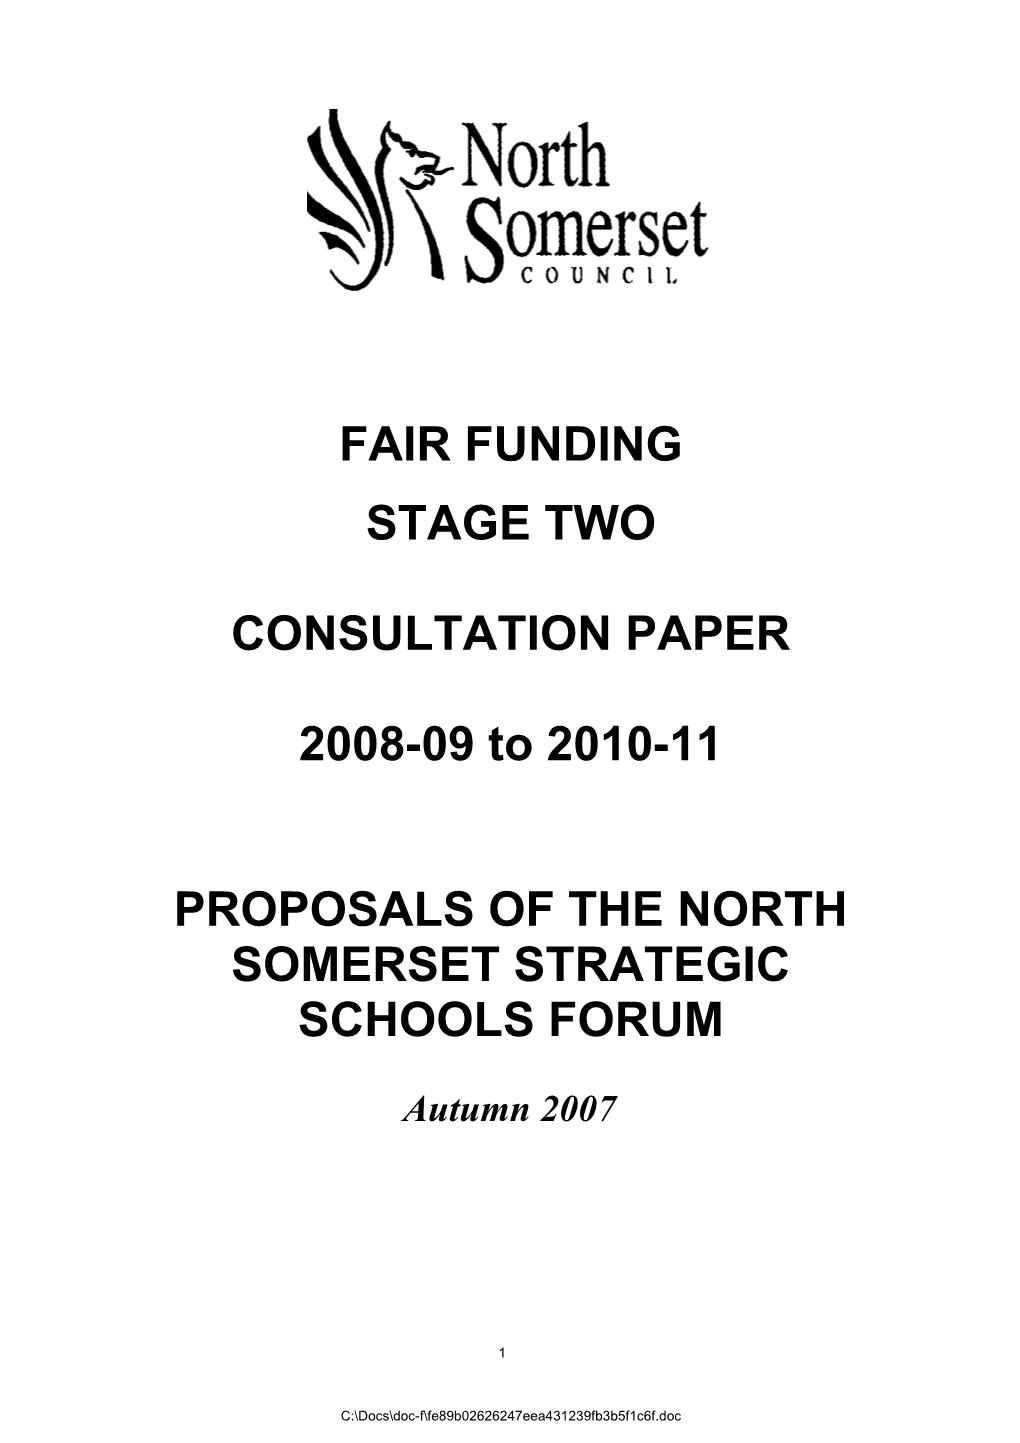 Proposals of the North Somerset Strategic Schools Forum